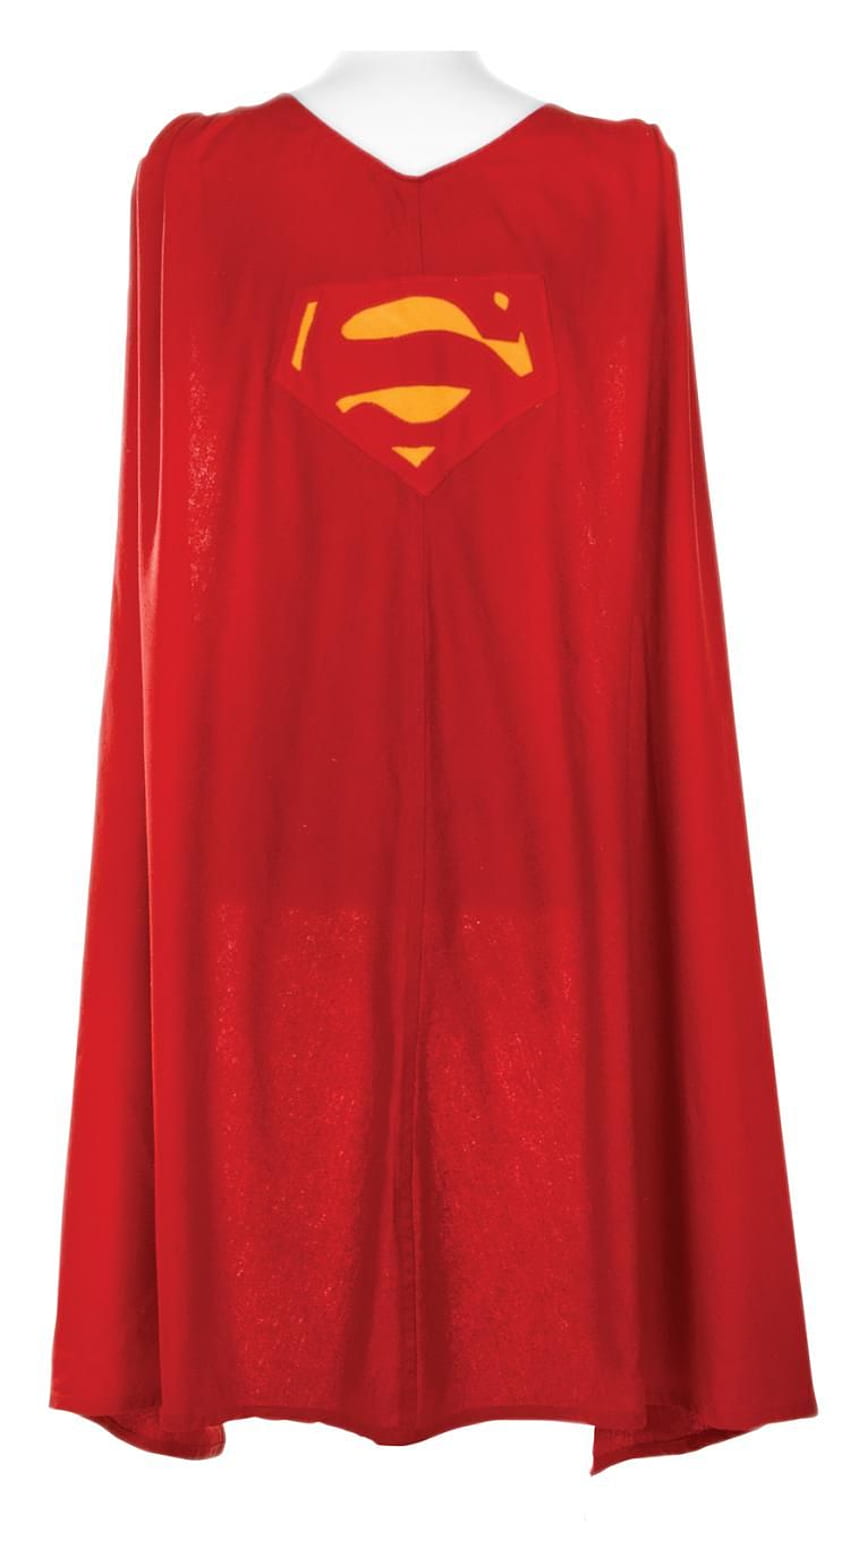 The Superman Super Site 30 พฤษภาคม 2017: Vintage George Reeves Superman Cape & Belt Buckle มุ่งหน้าสู่การประมูล ผ้าคลุมซุปเปอร์แมน ซุปเปอร์แมน ซุปเปอร์แมน วอลล์เปเปอร์โทรศัพท์ HD